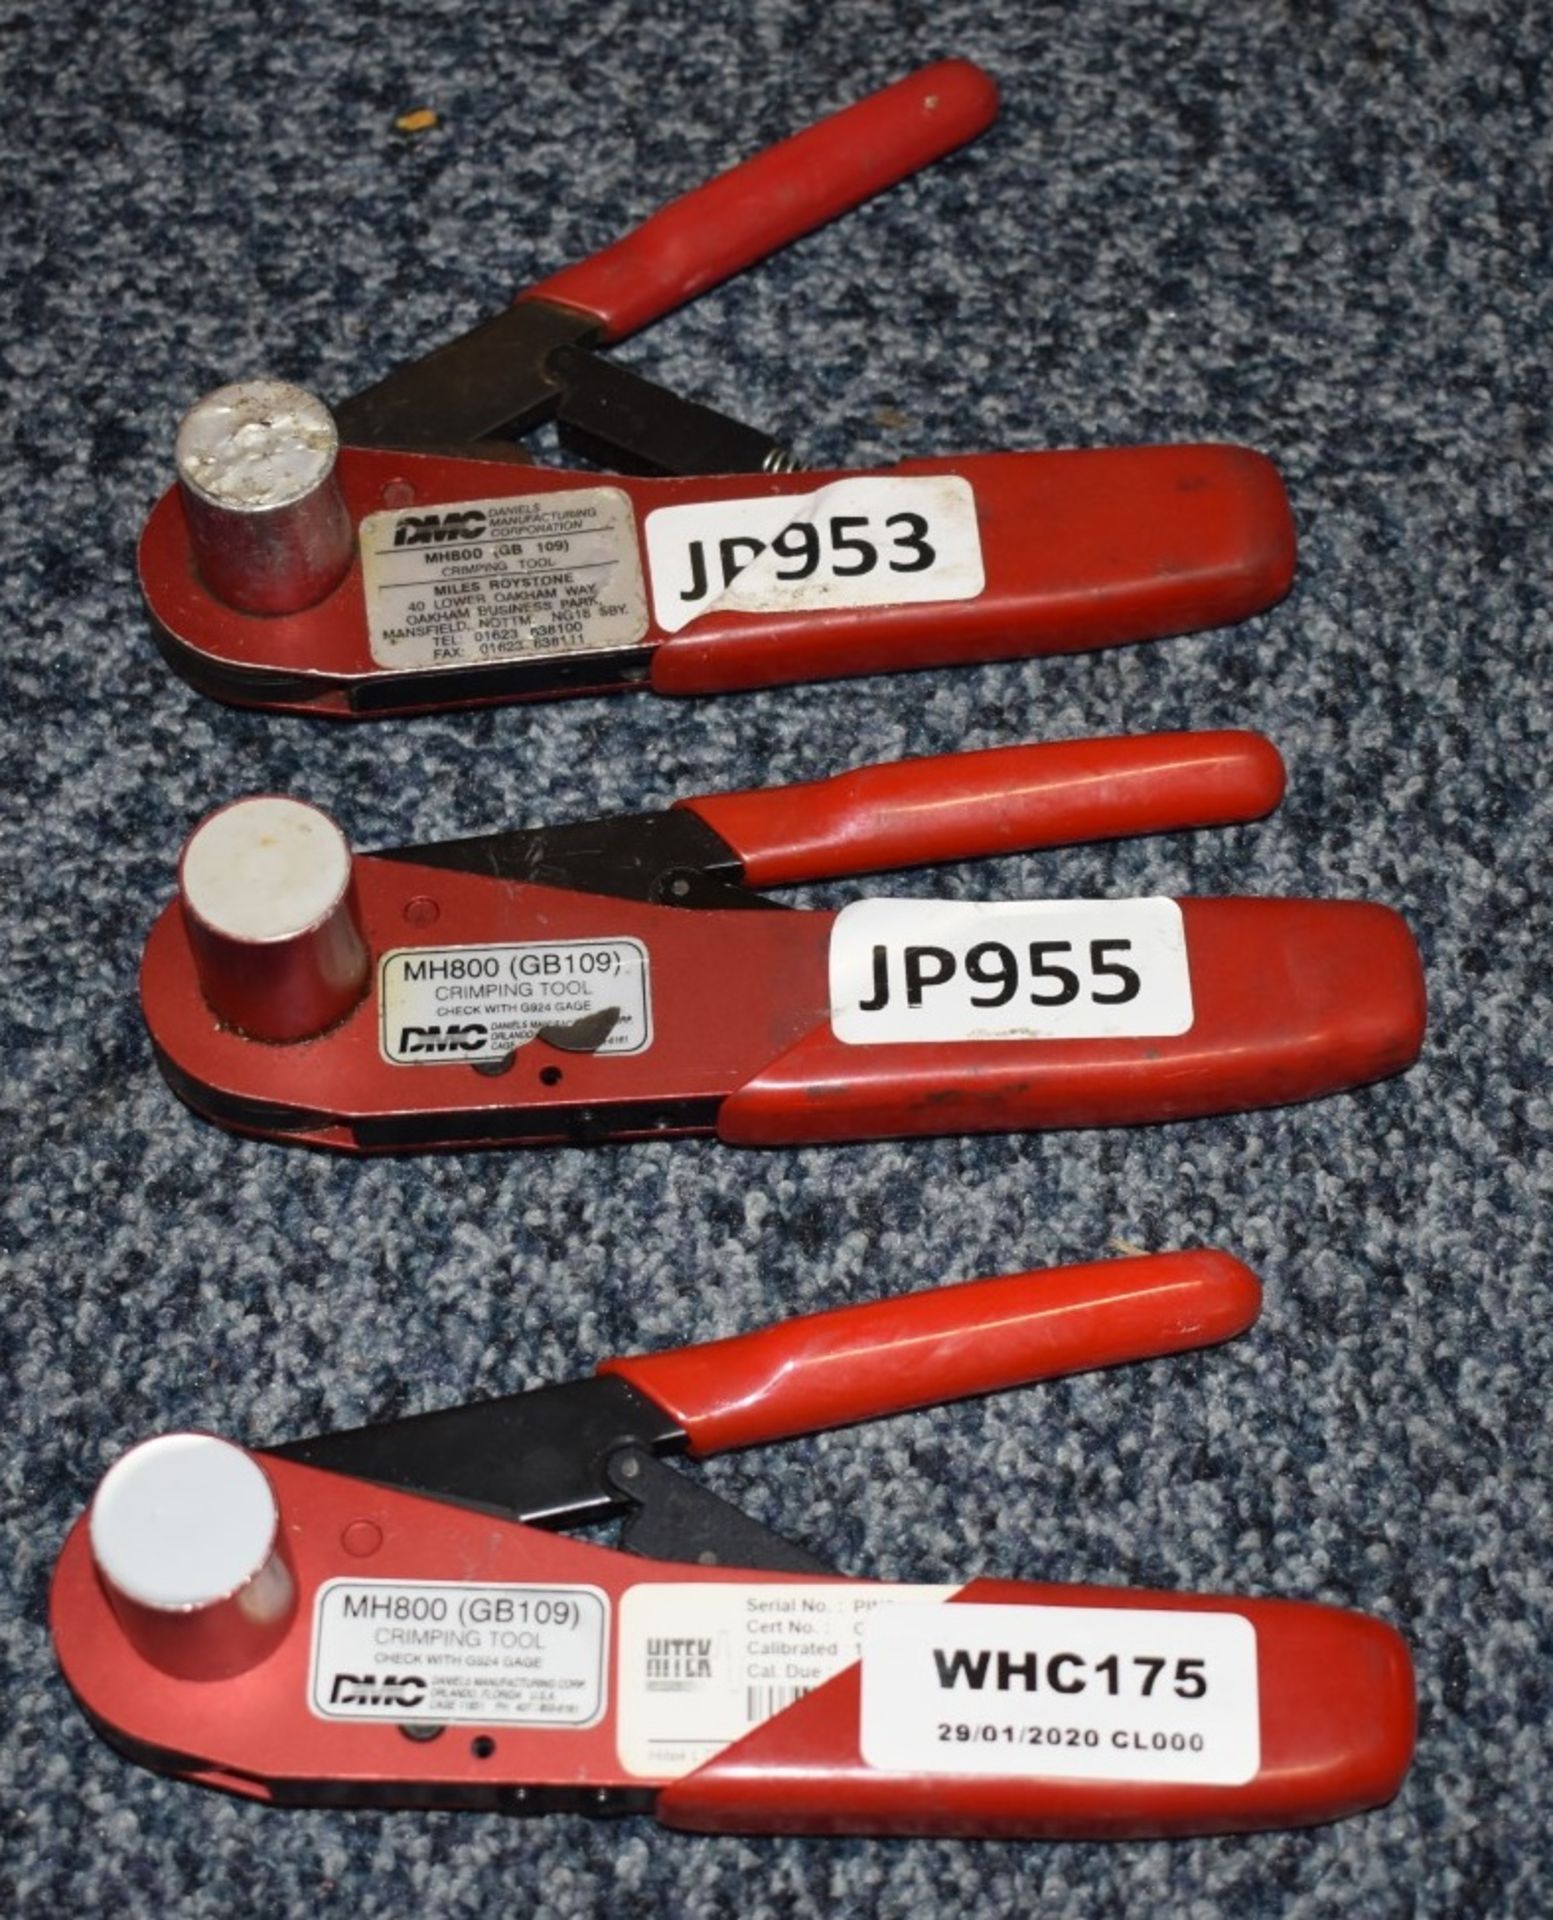 3 x DMC MH800 Crimping Tools - Ref WHC175 WH2 - CL011 - Location: Altrincham WA14